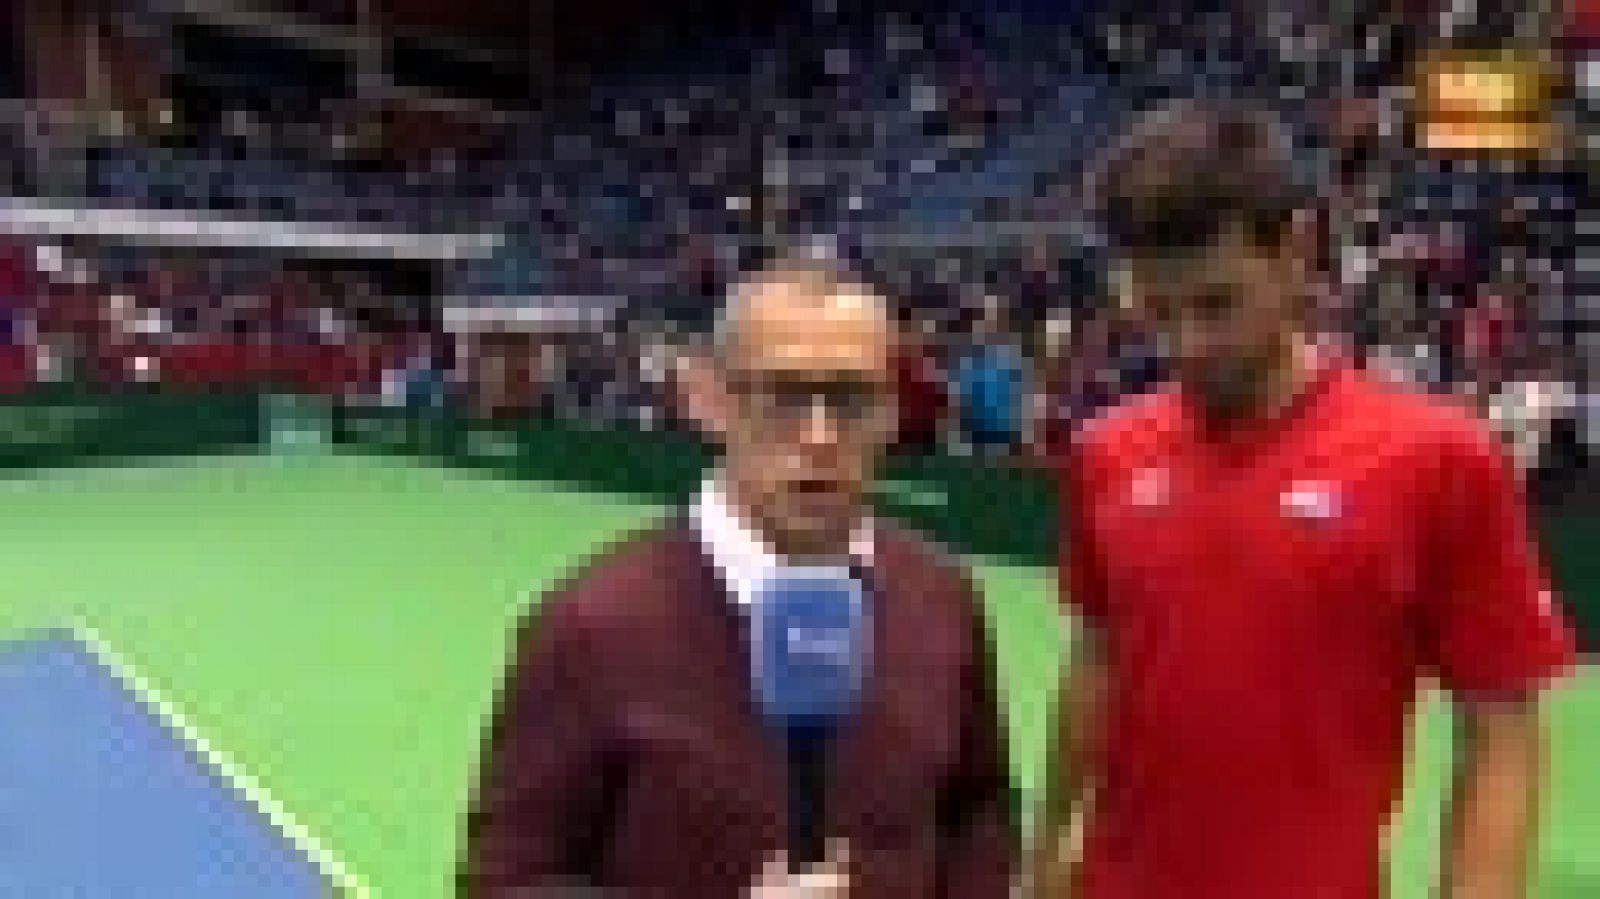 Sin programa: Djokovic: "He tenido mucha confianza en mi juego" | RTVE Play